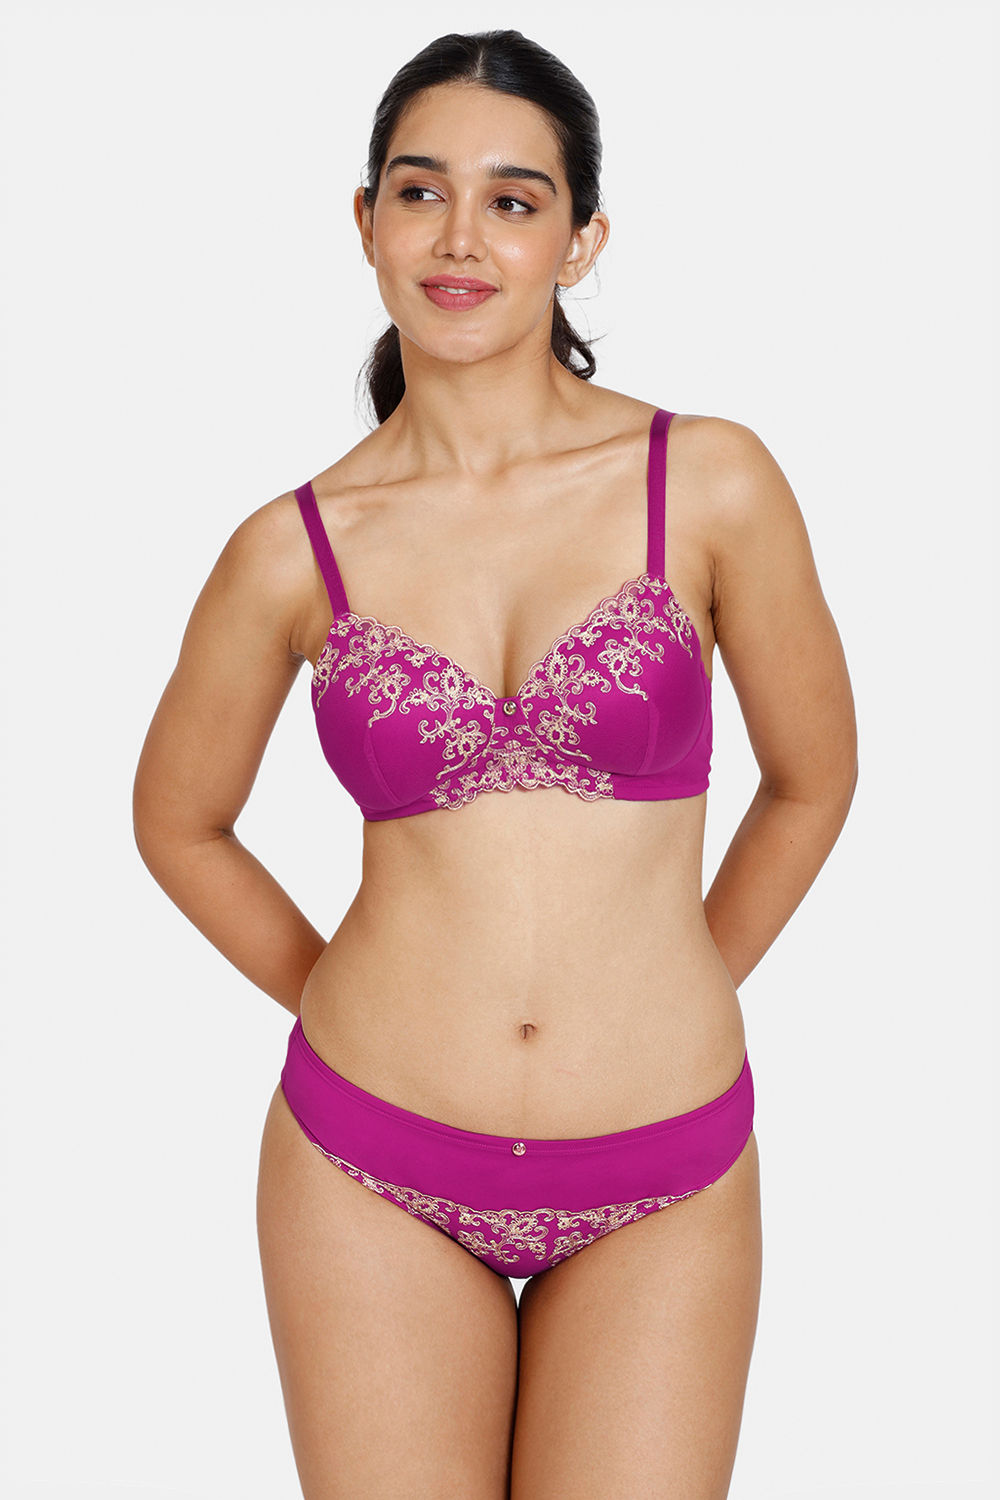 Buy Xs and Os Women Bikini Lace Bra Panty Lingerie Set (Rose, Free